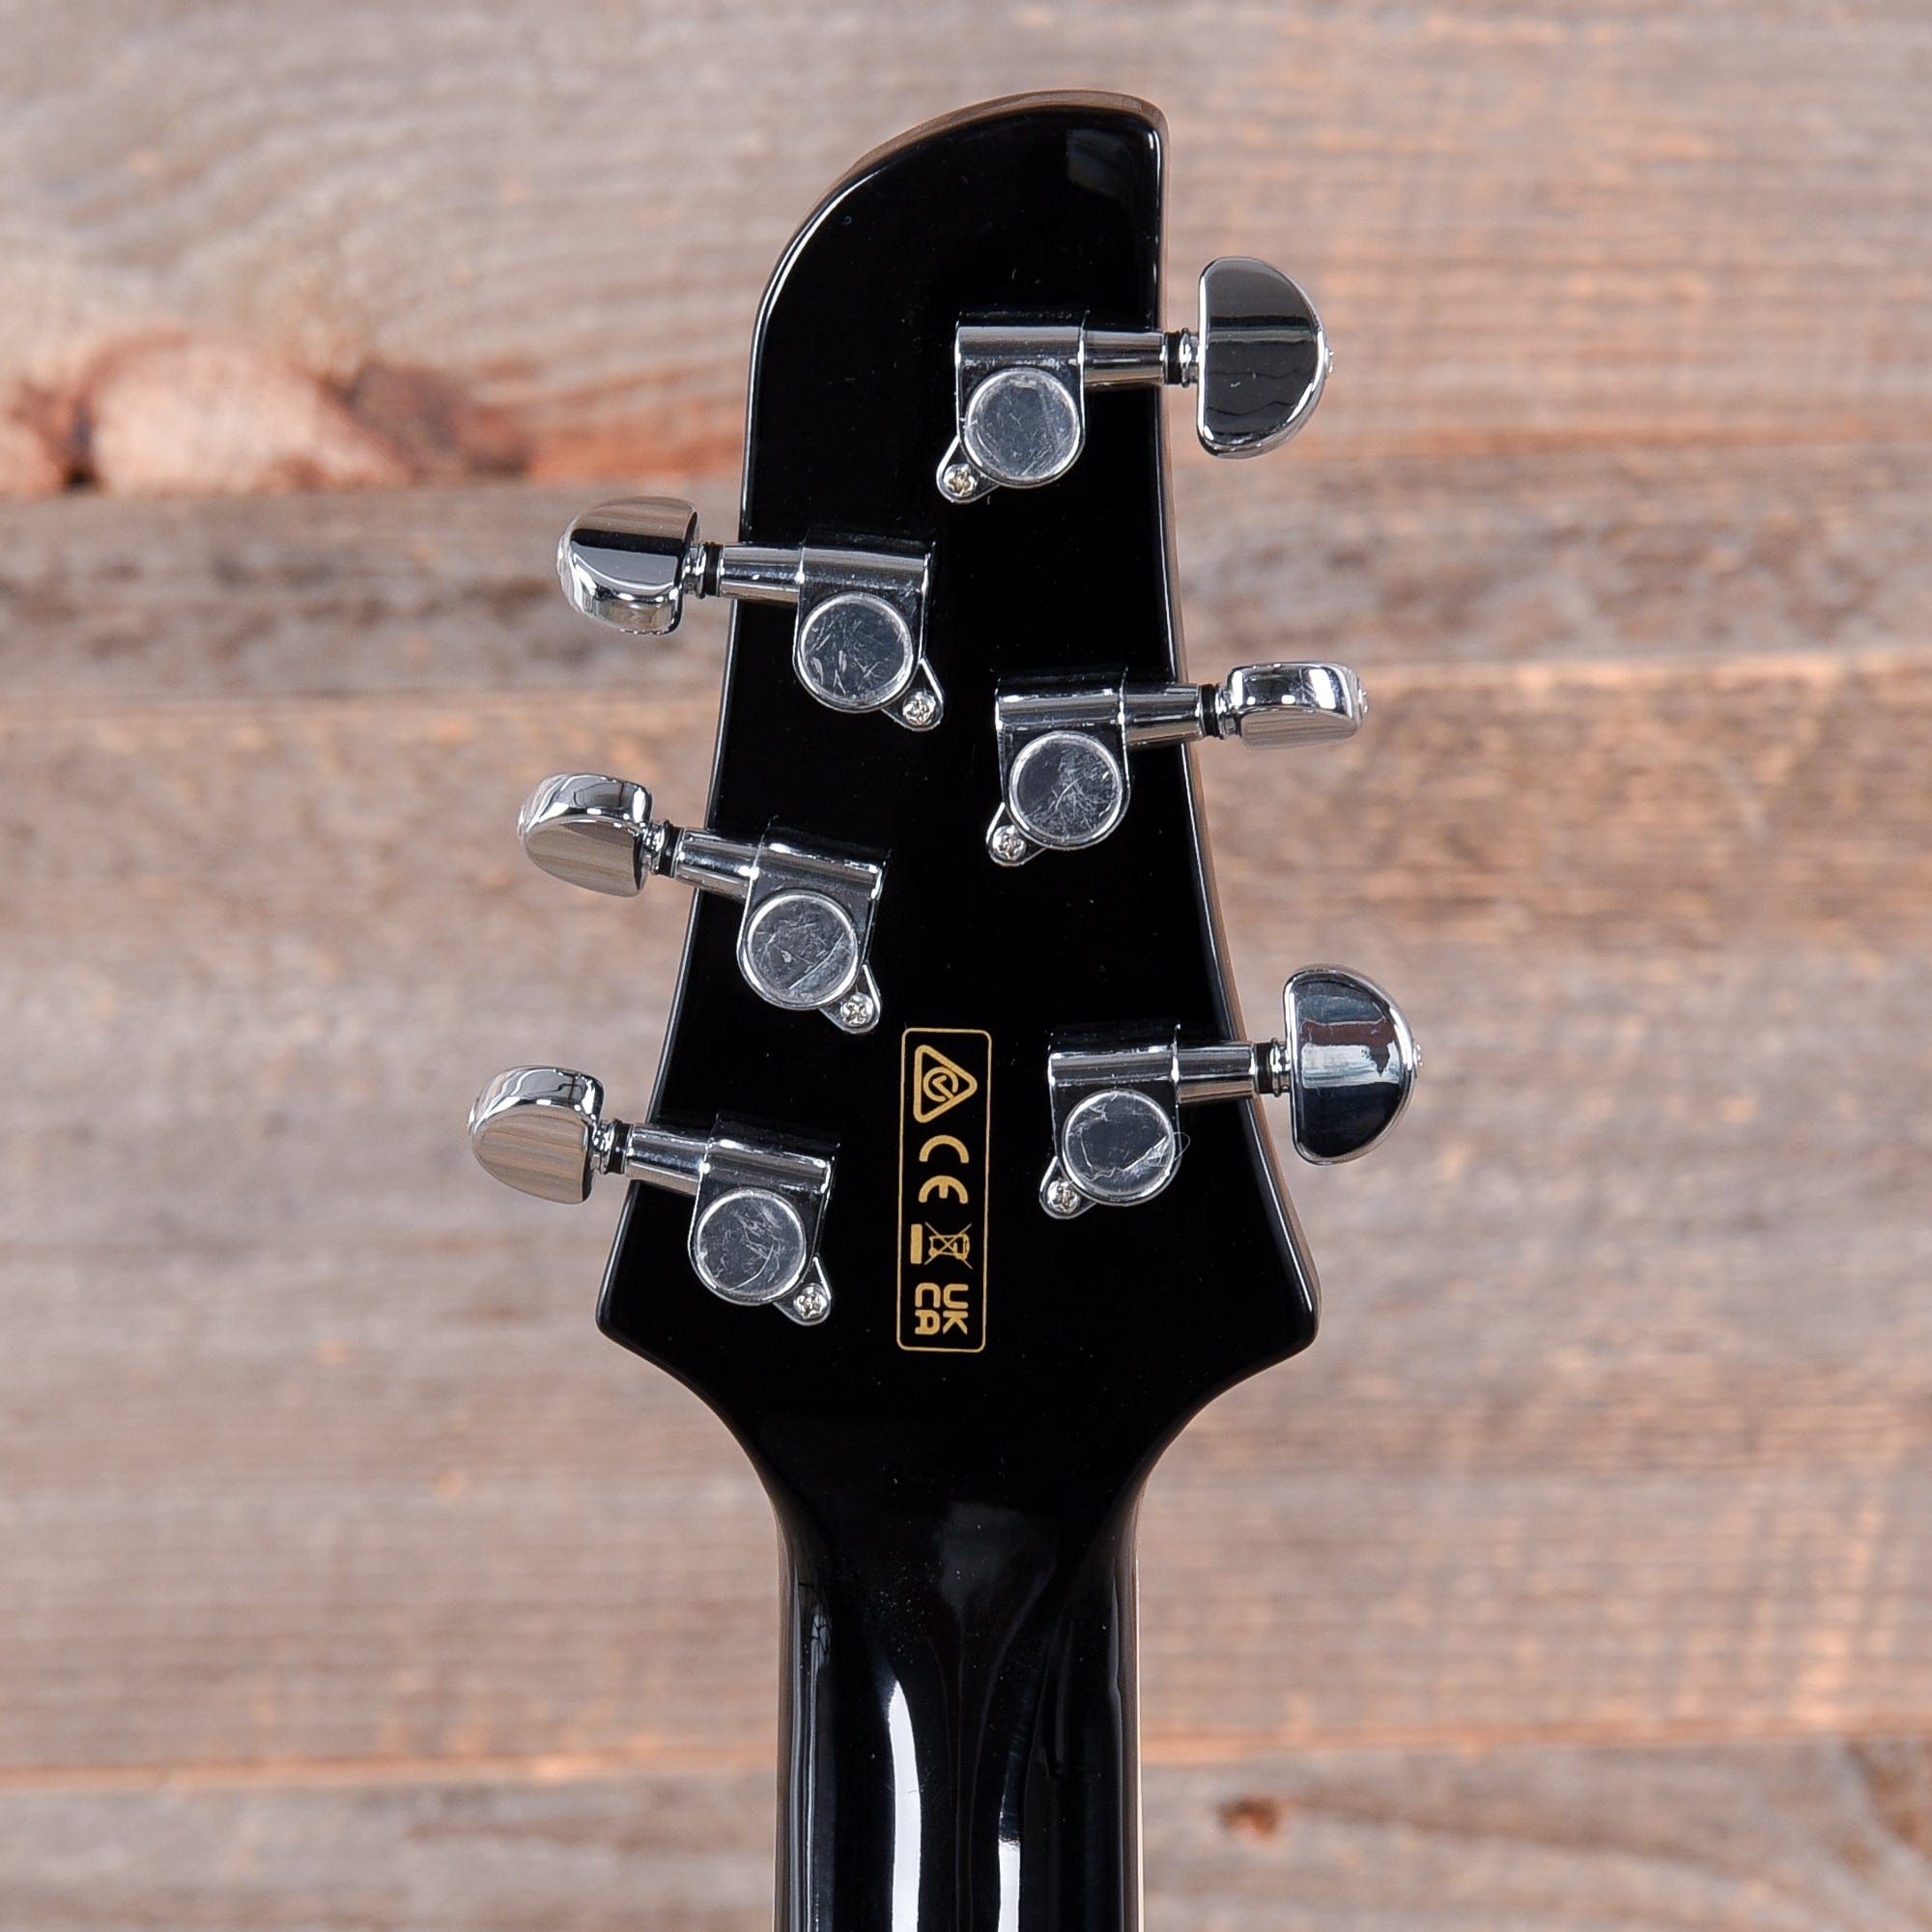 Ibanez TCY10LEBK Talman Acoustic-Electric Spruce/Sapele Black High Gloss LEFTY Acoustic Guitars / Built-in Electronics